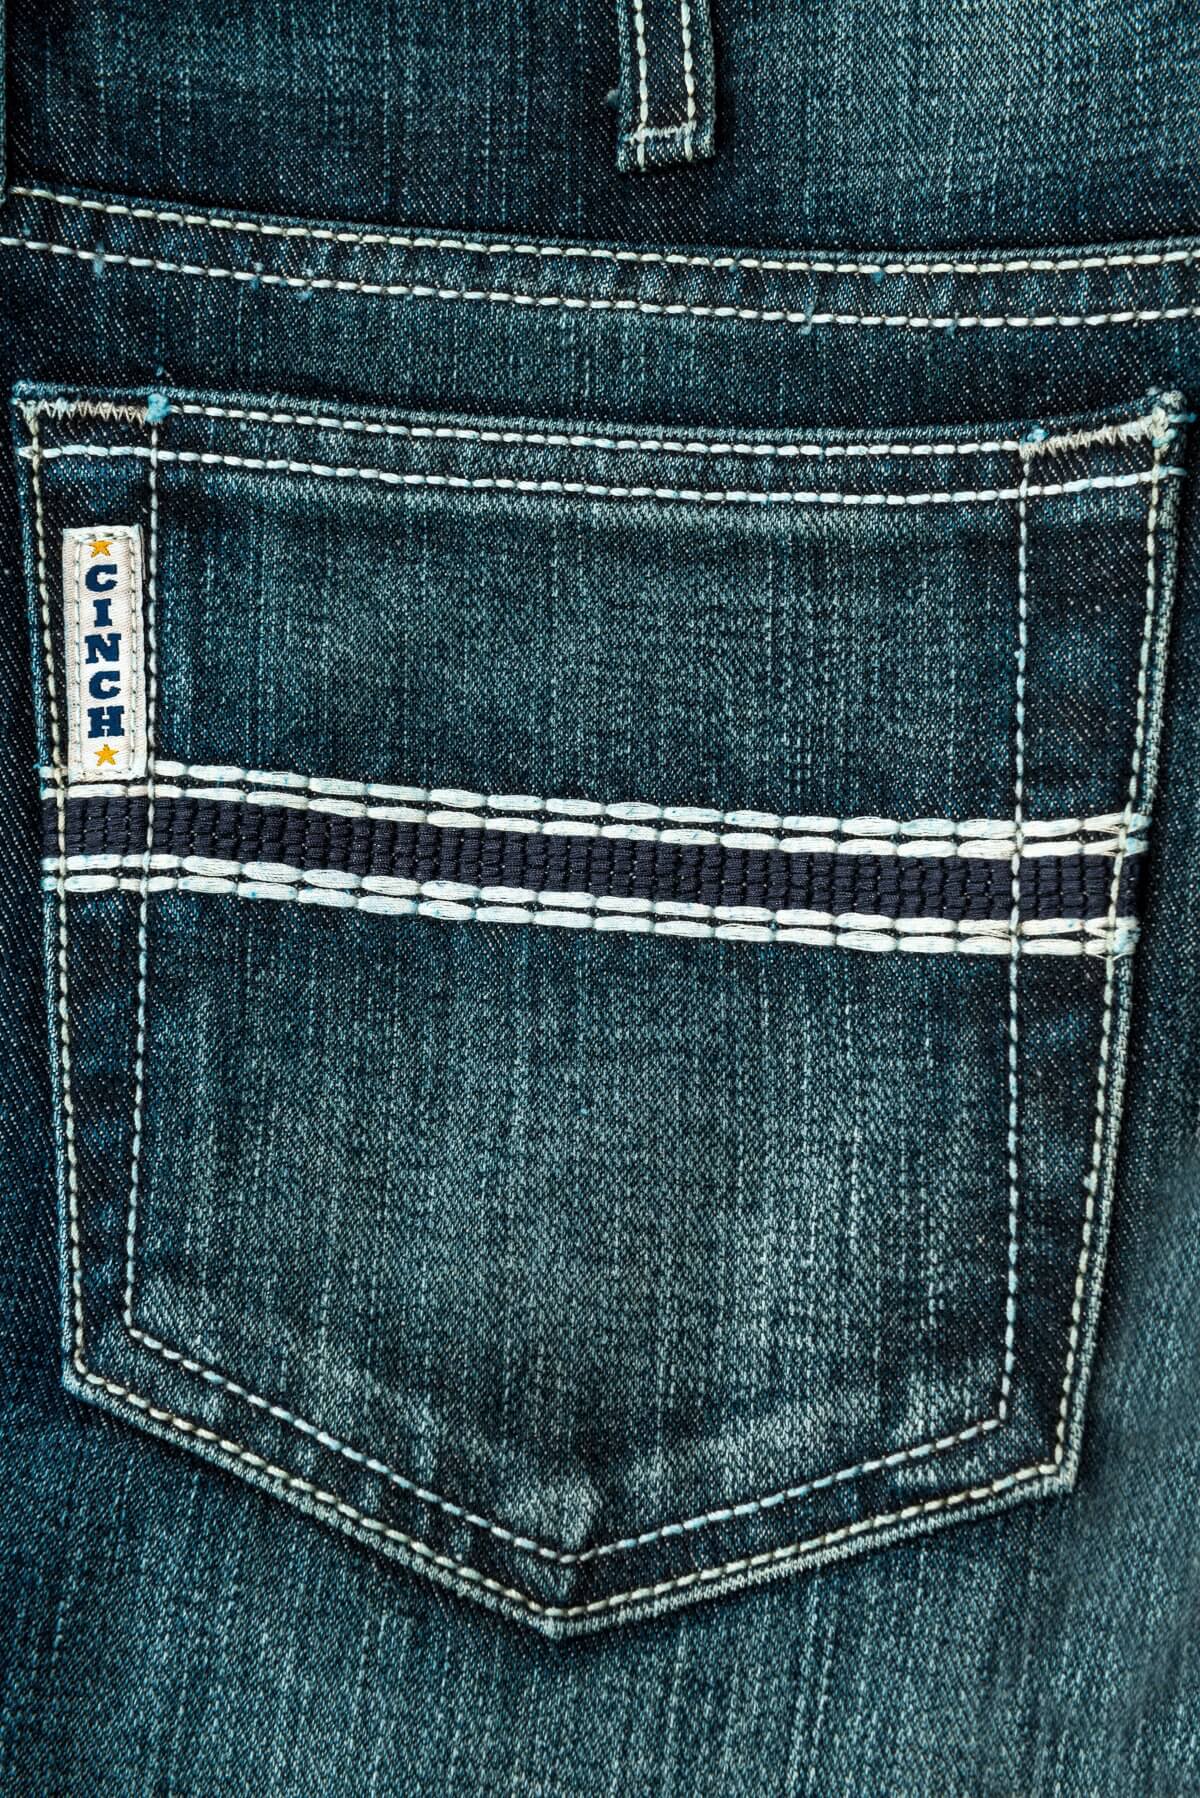 Men's Cinch White Label Jeans - Relaxed Fit - Dark Stonewash